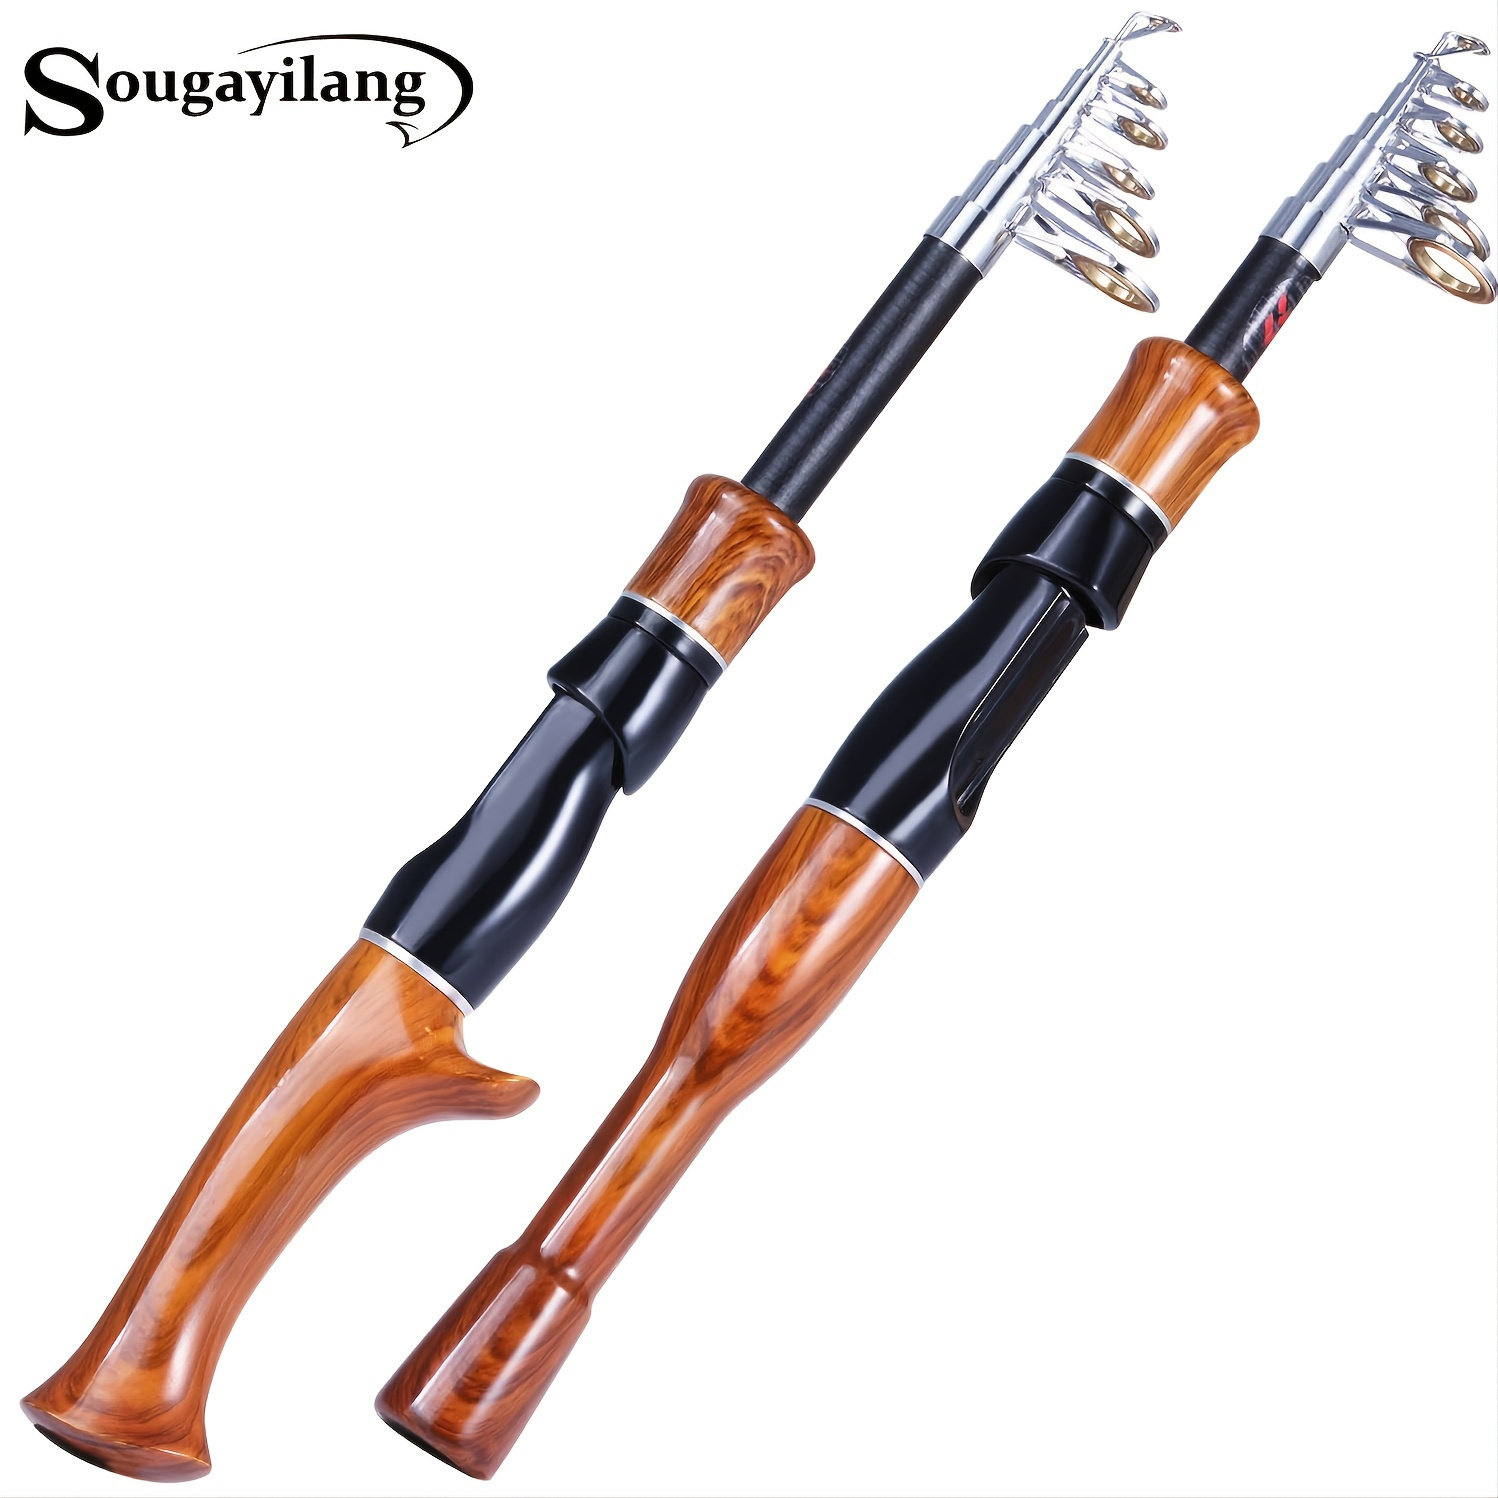 

Sougayilang Telescopic Fishing Rod - Lightweight, Portable, And Durable Cork Handle Travel Fishing Rod